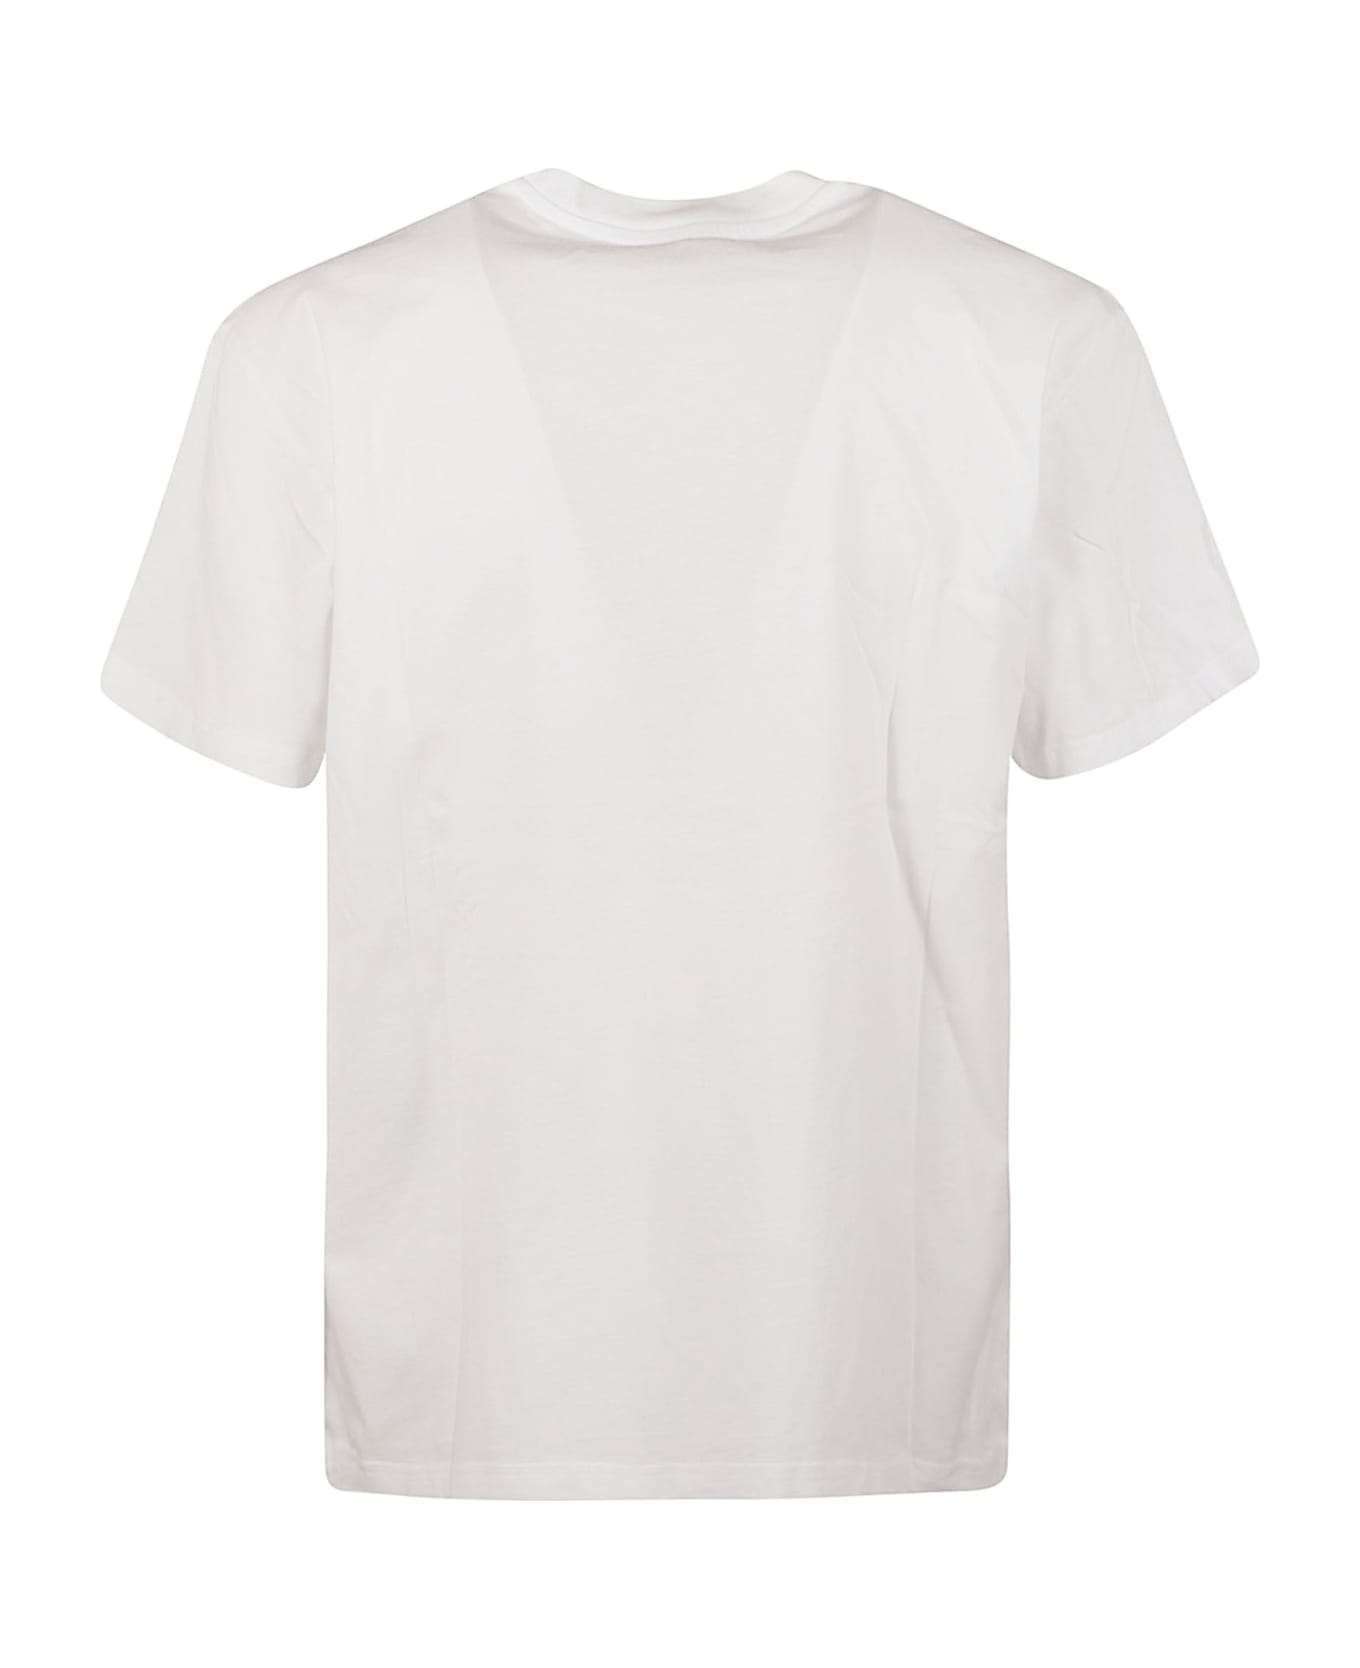 J.W. Anderson Gnome Chest T-shirt - White